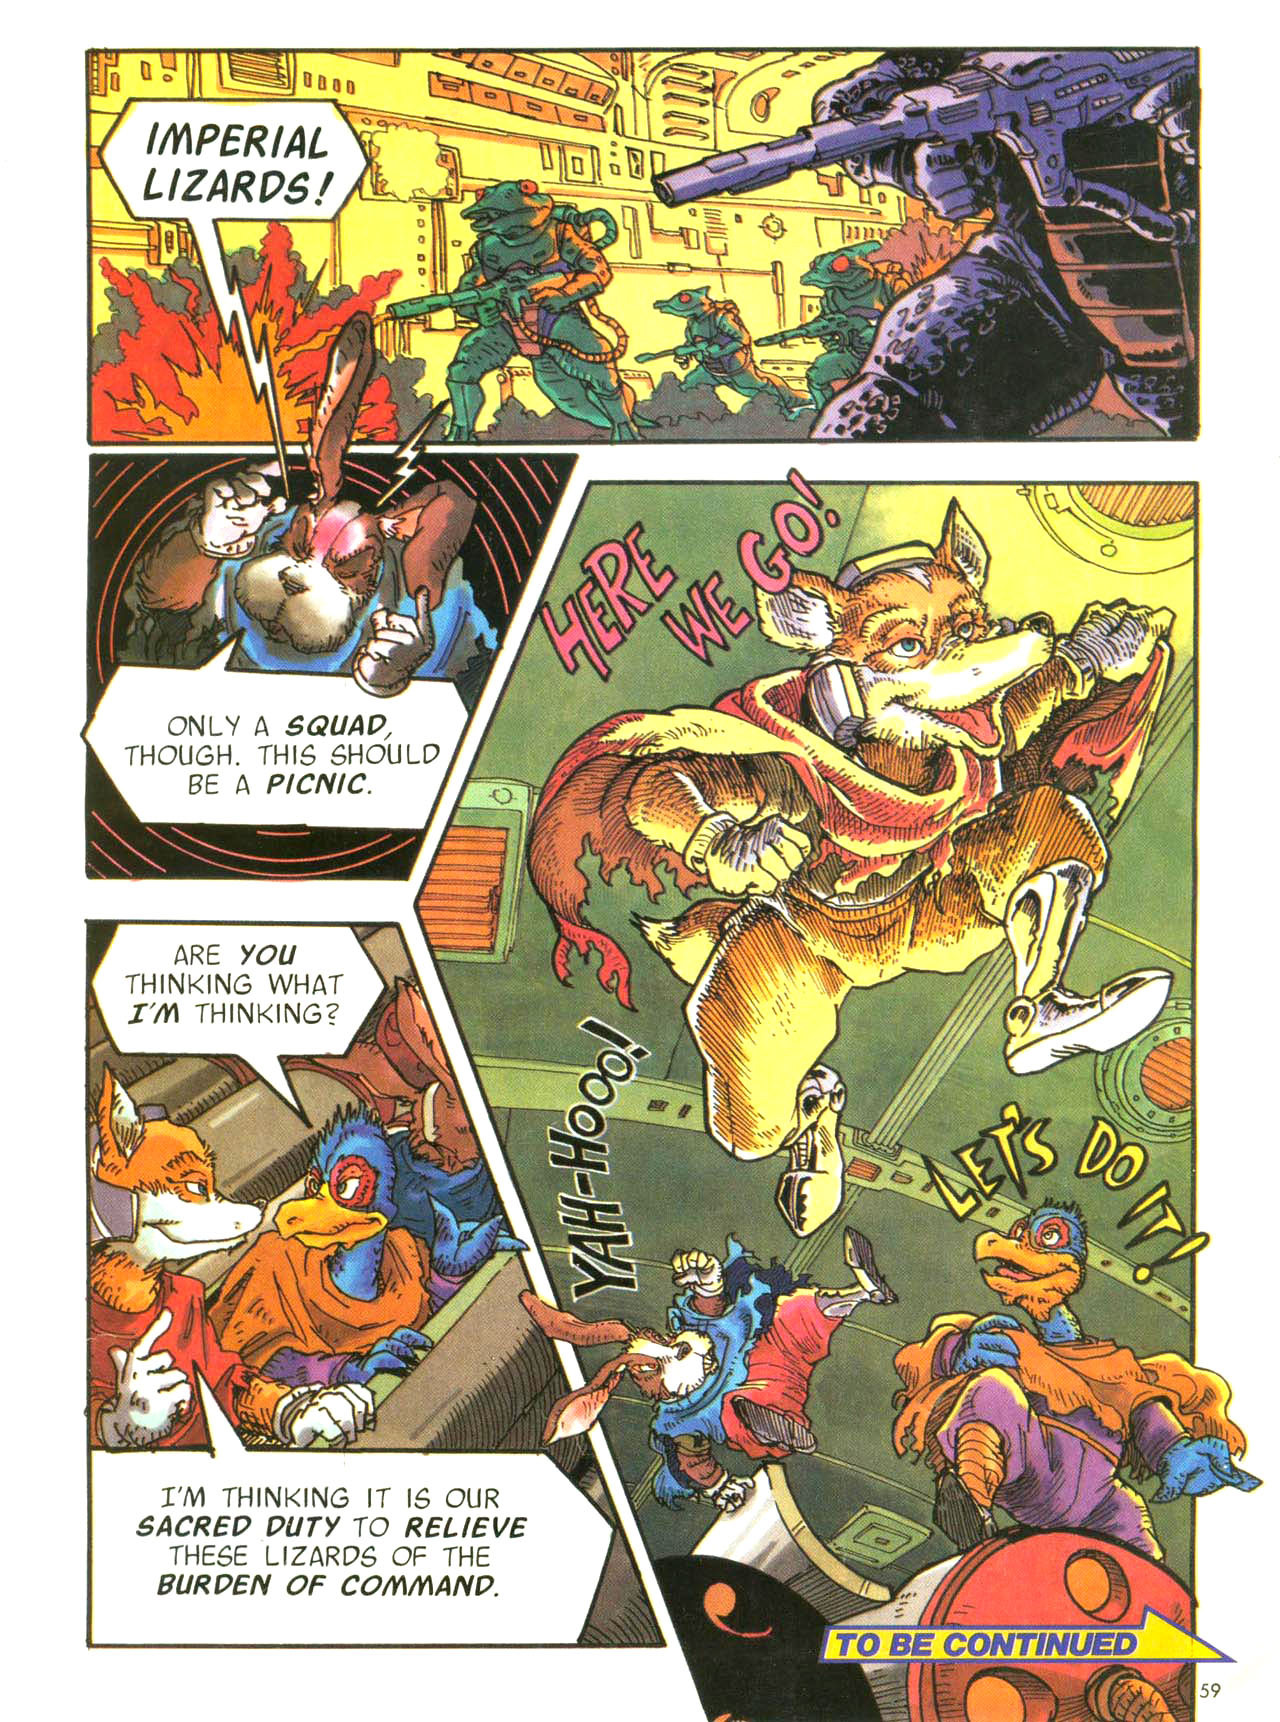 Old Game Mags - Nintendo Power #45, Feb 1993 - Star Fox Comic...